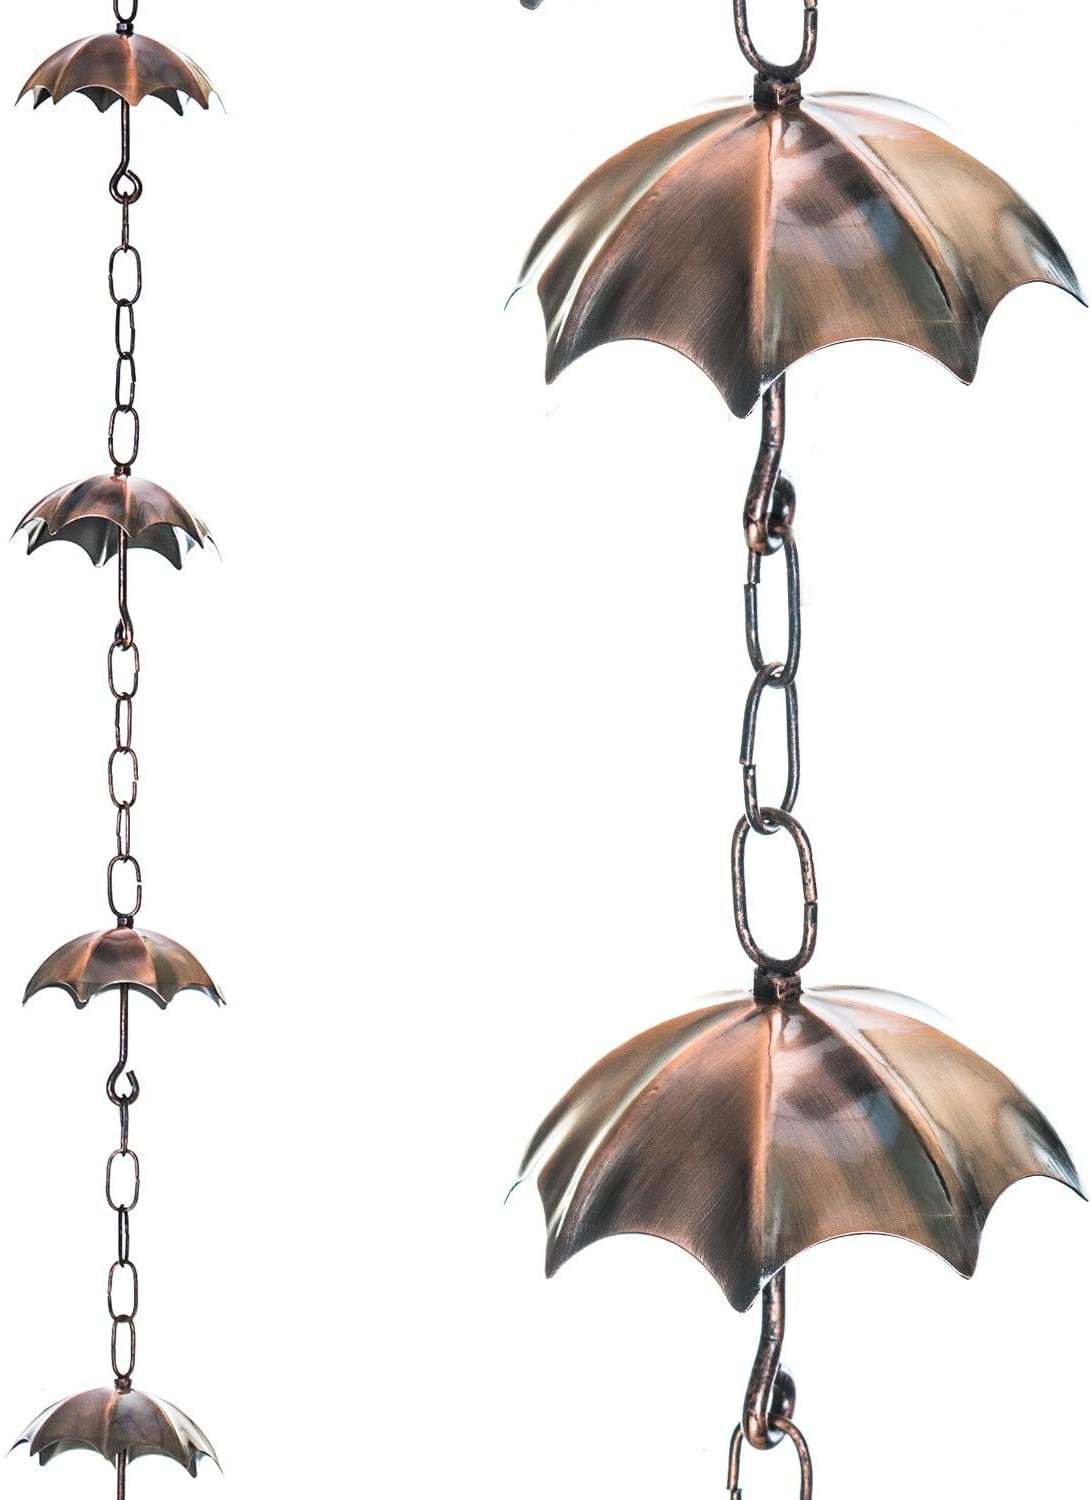 Hanayard Rain Chain Gutter Decorative Downspout Diverter Outside Metal Butterfly Decor Accessory 3 Ft 